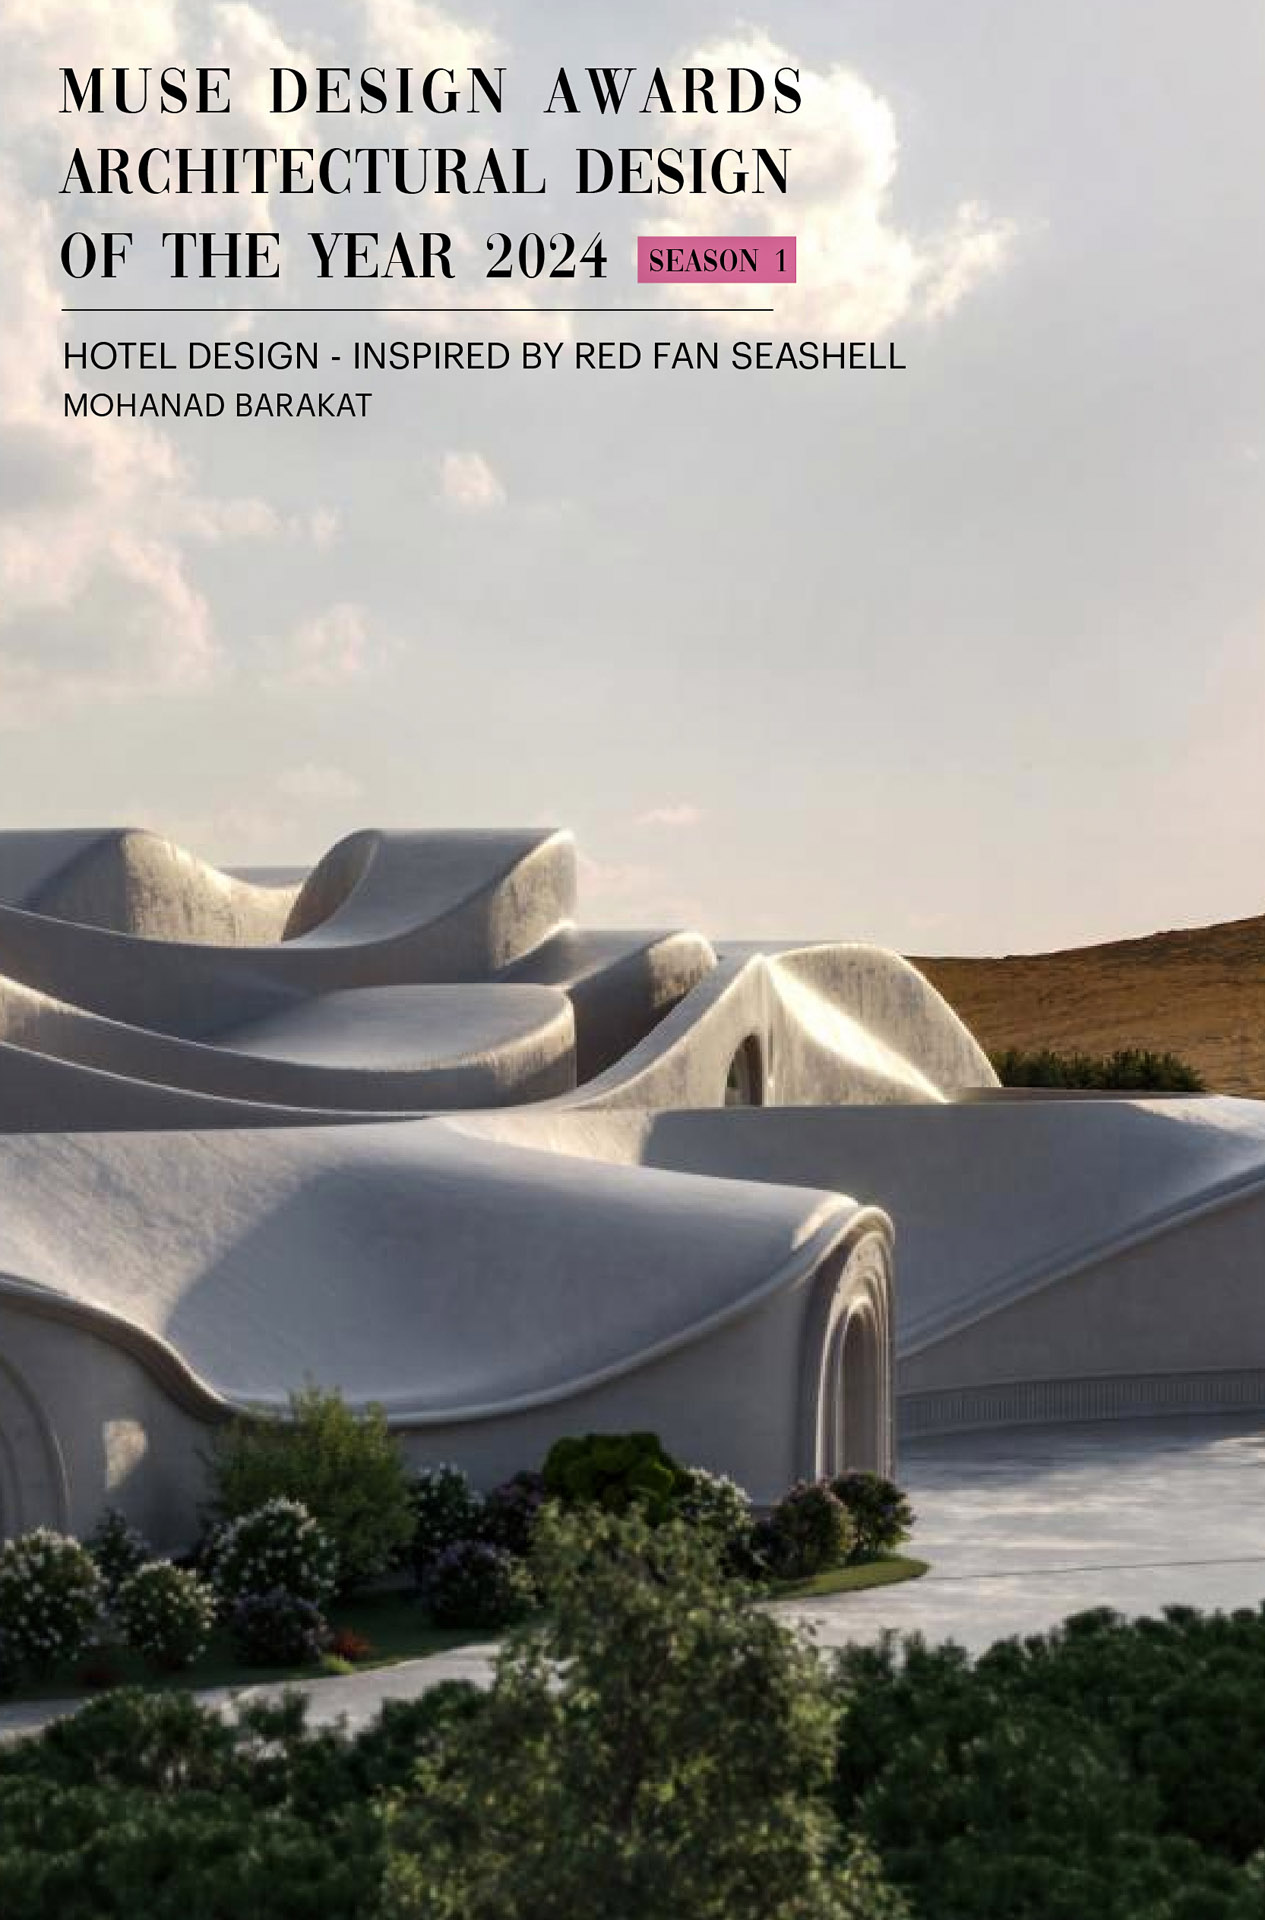 MUSE Design Awards - Architectural Design Awards 2023